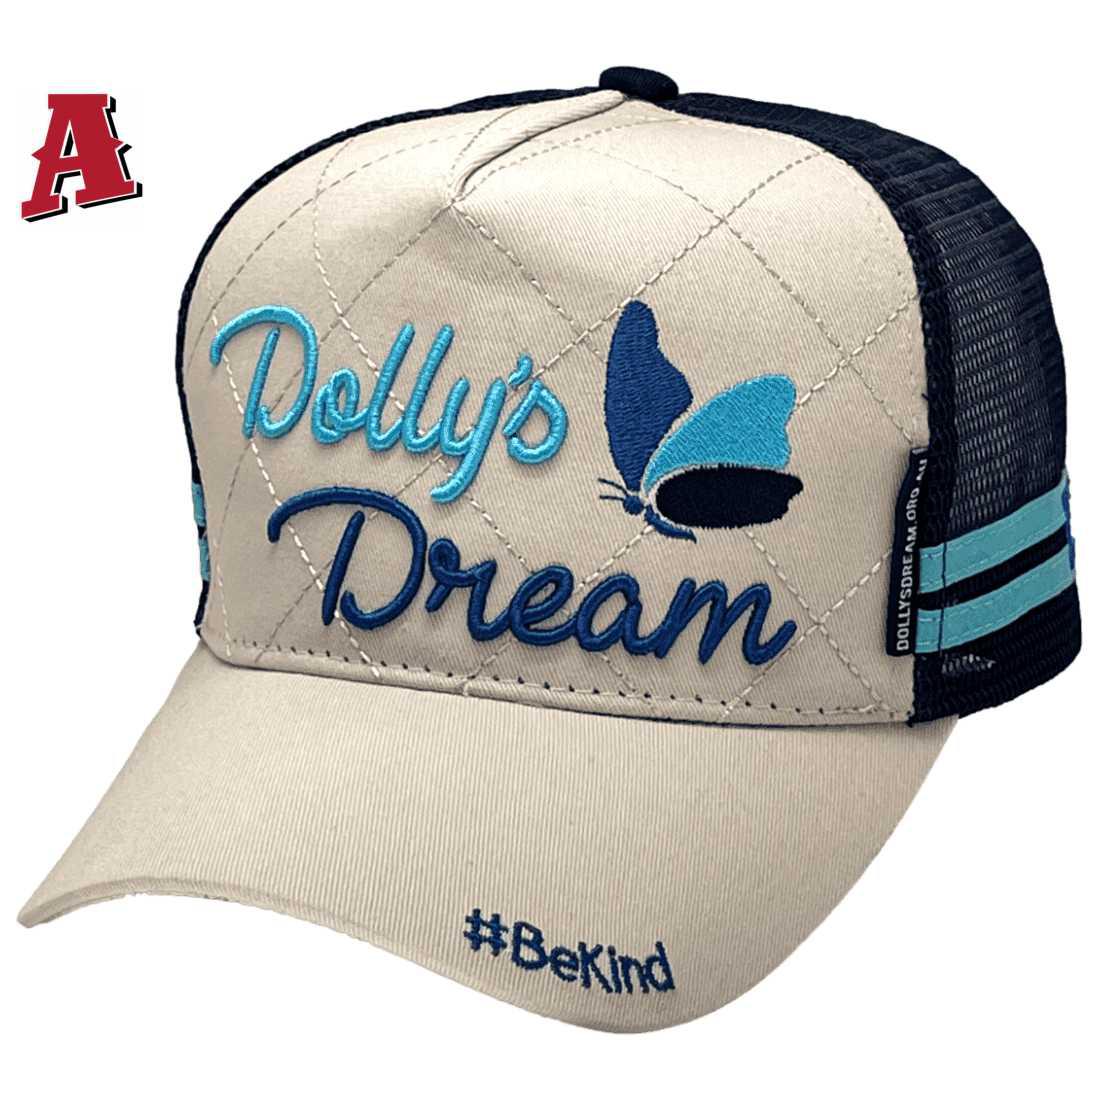 Dollys Dream Foundation BeKind Power Aussie Trucker Hat LP with Australian Head Fit Crown and 2 Side Stripes